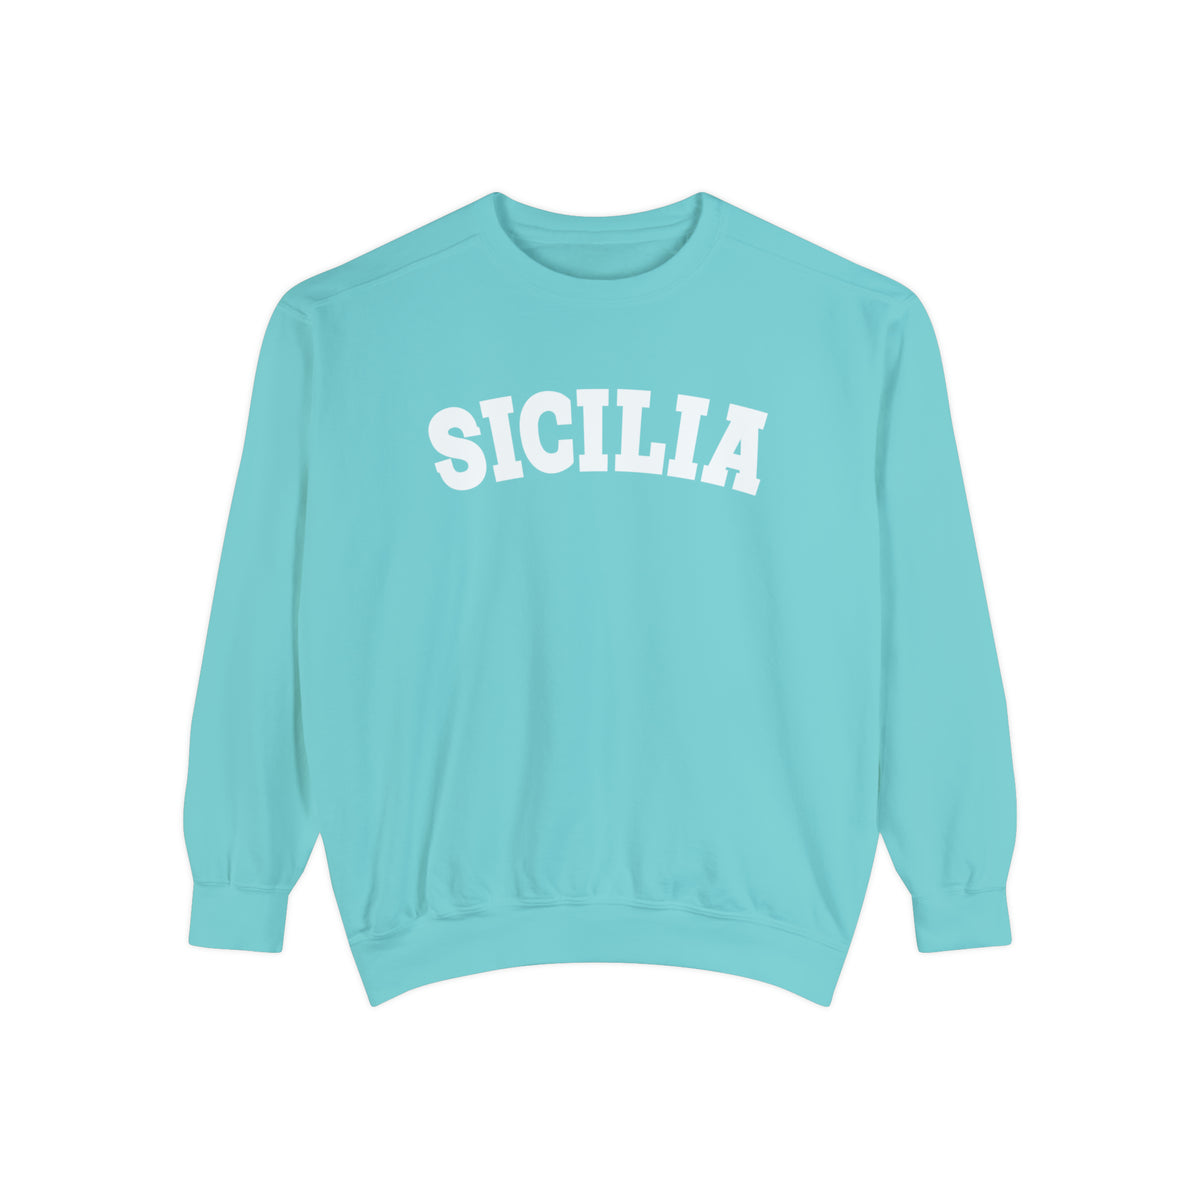 Sicilia College Style Italian Shirt | Sicily Italy Italian Gift | Unisex Garment-Dyed Sweatshirt